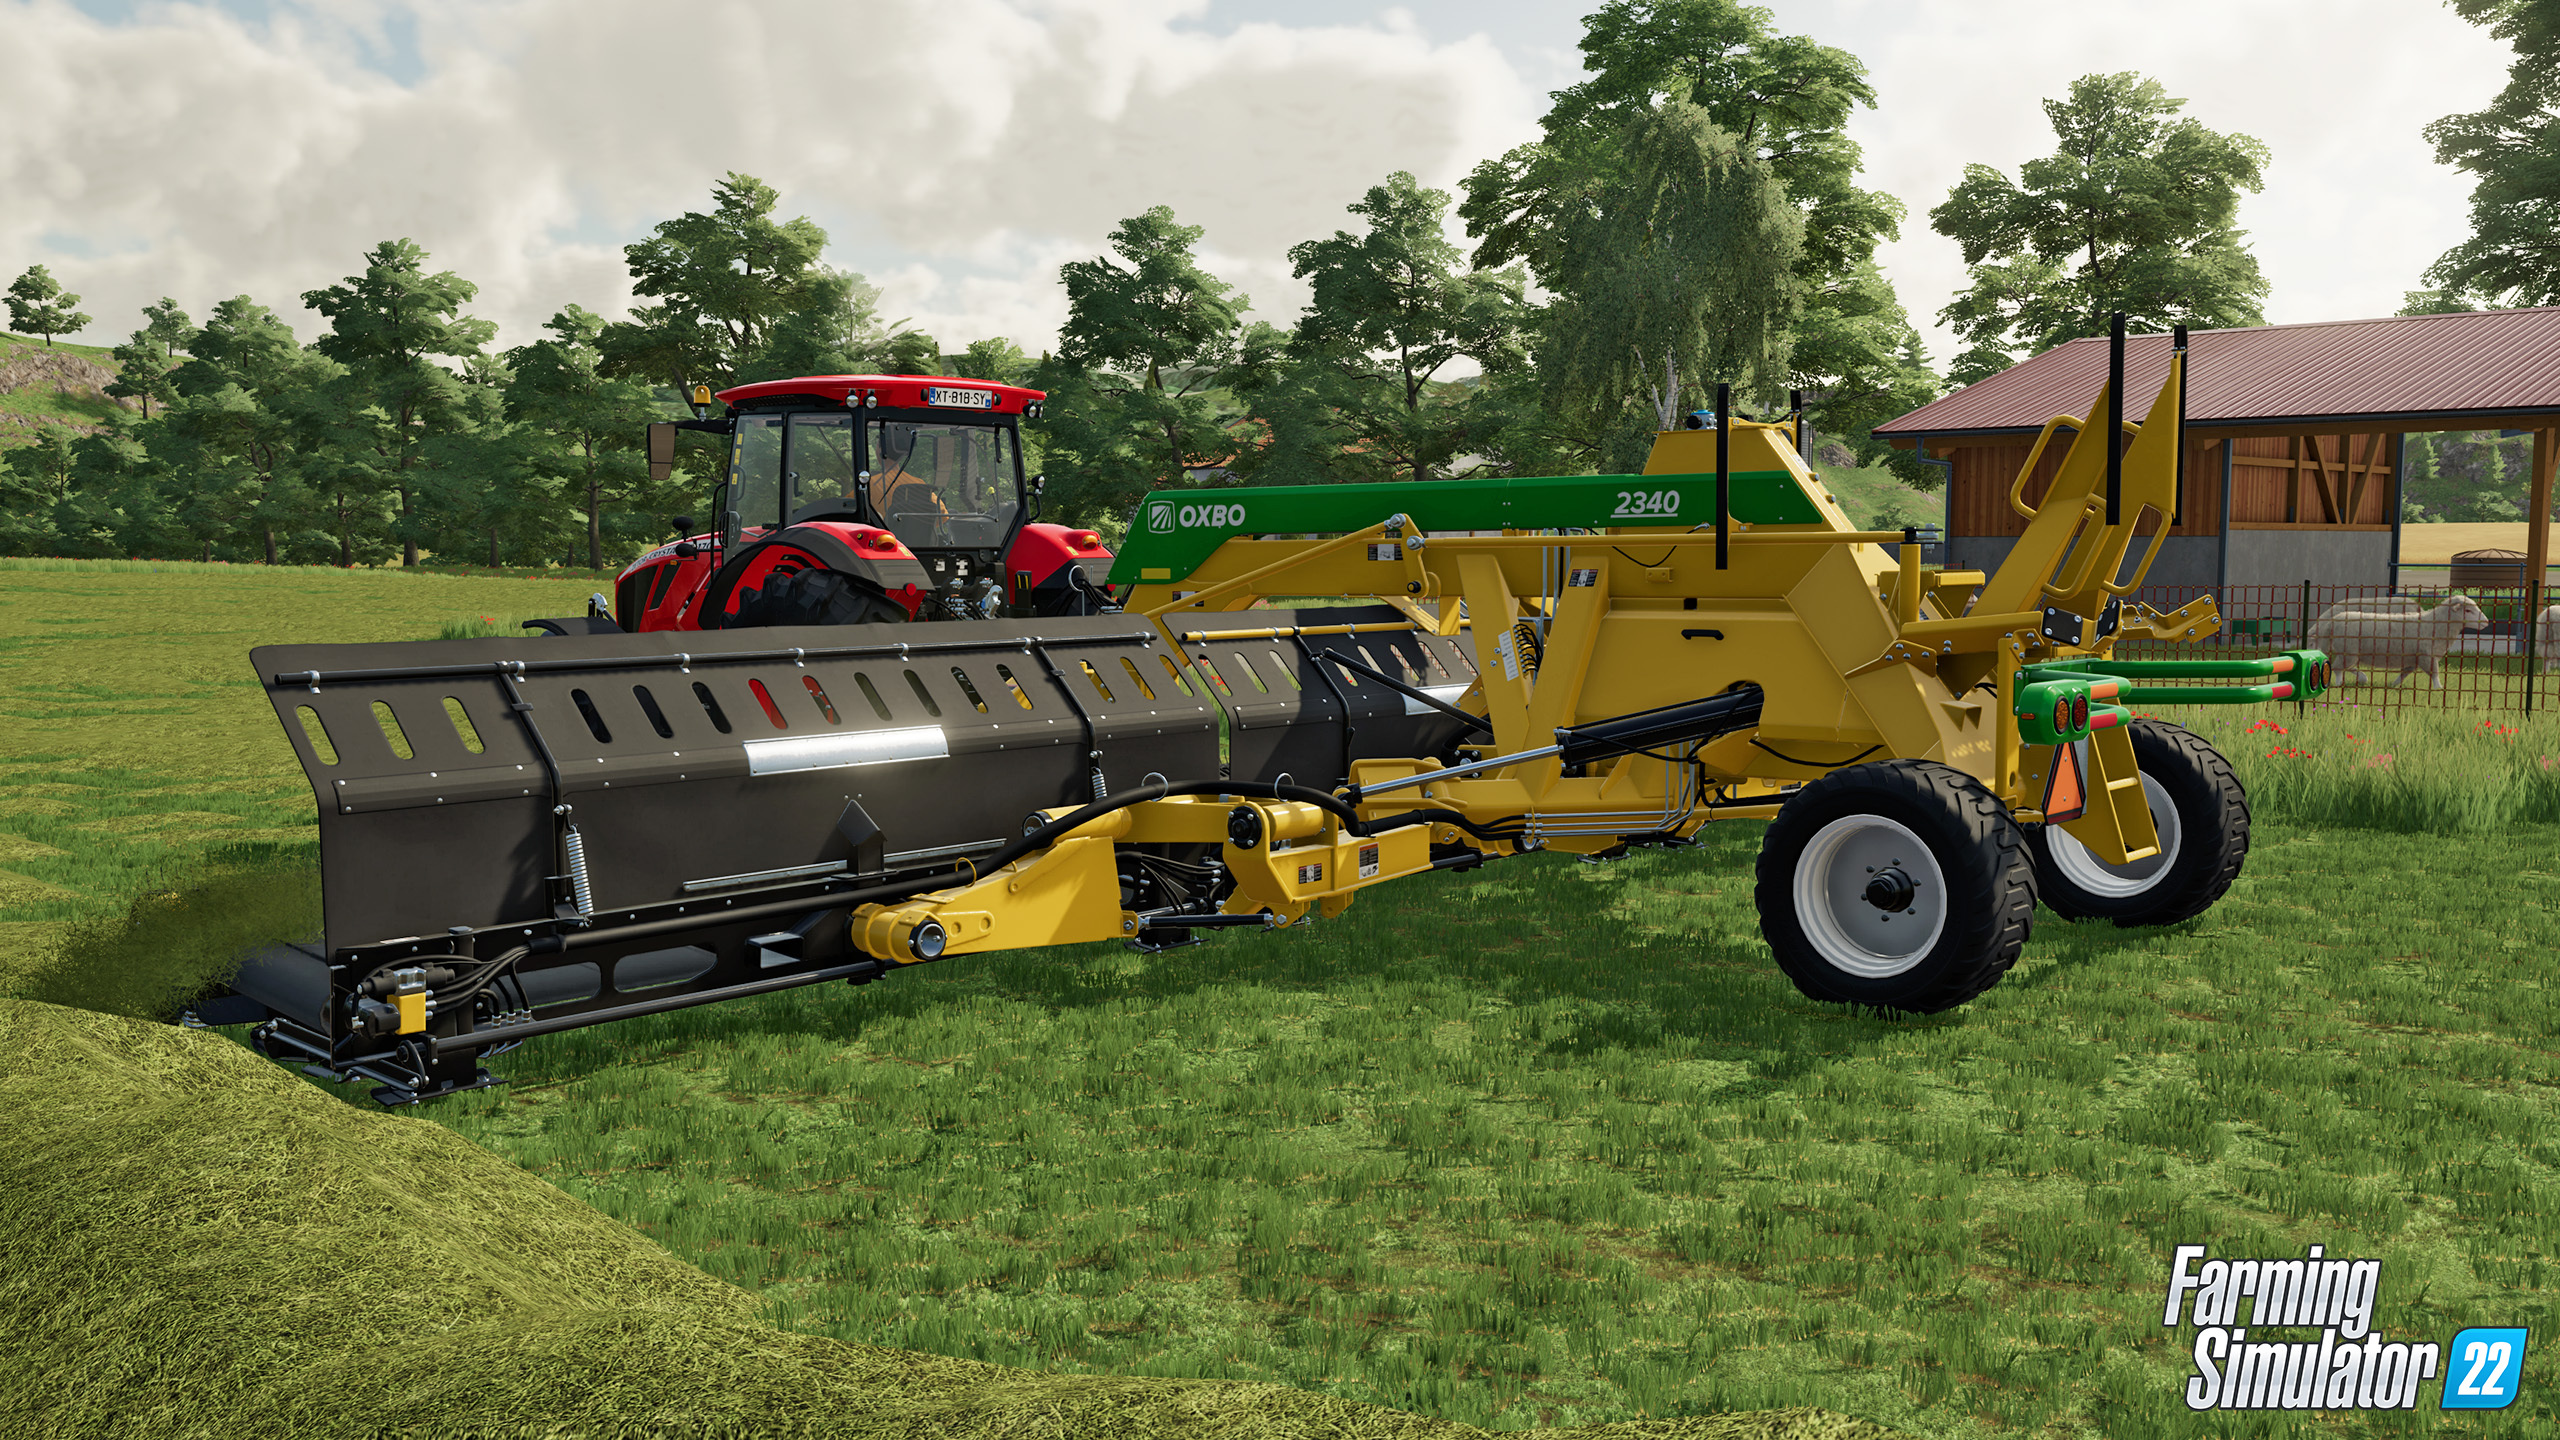 Le multijoueur de Farming Simulator 22 sera cross-platform